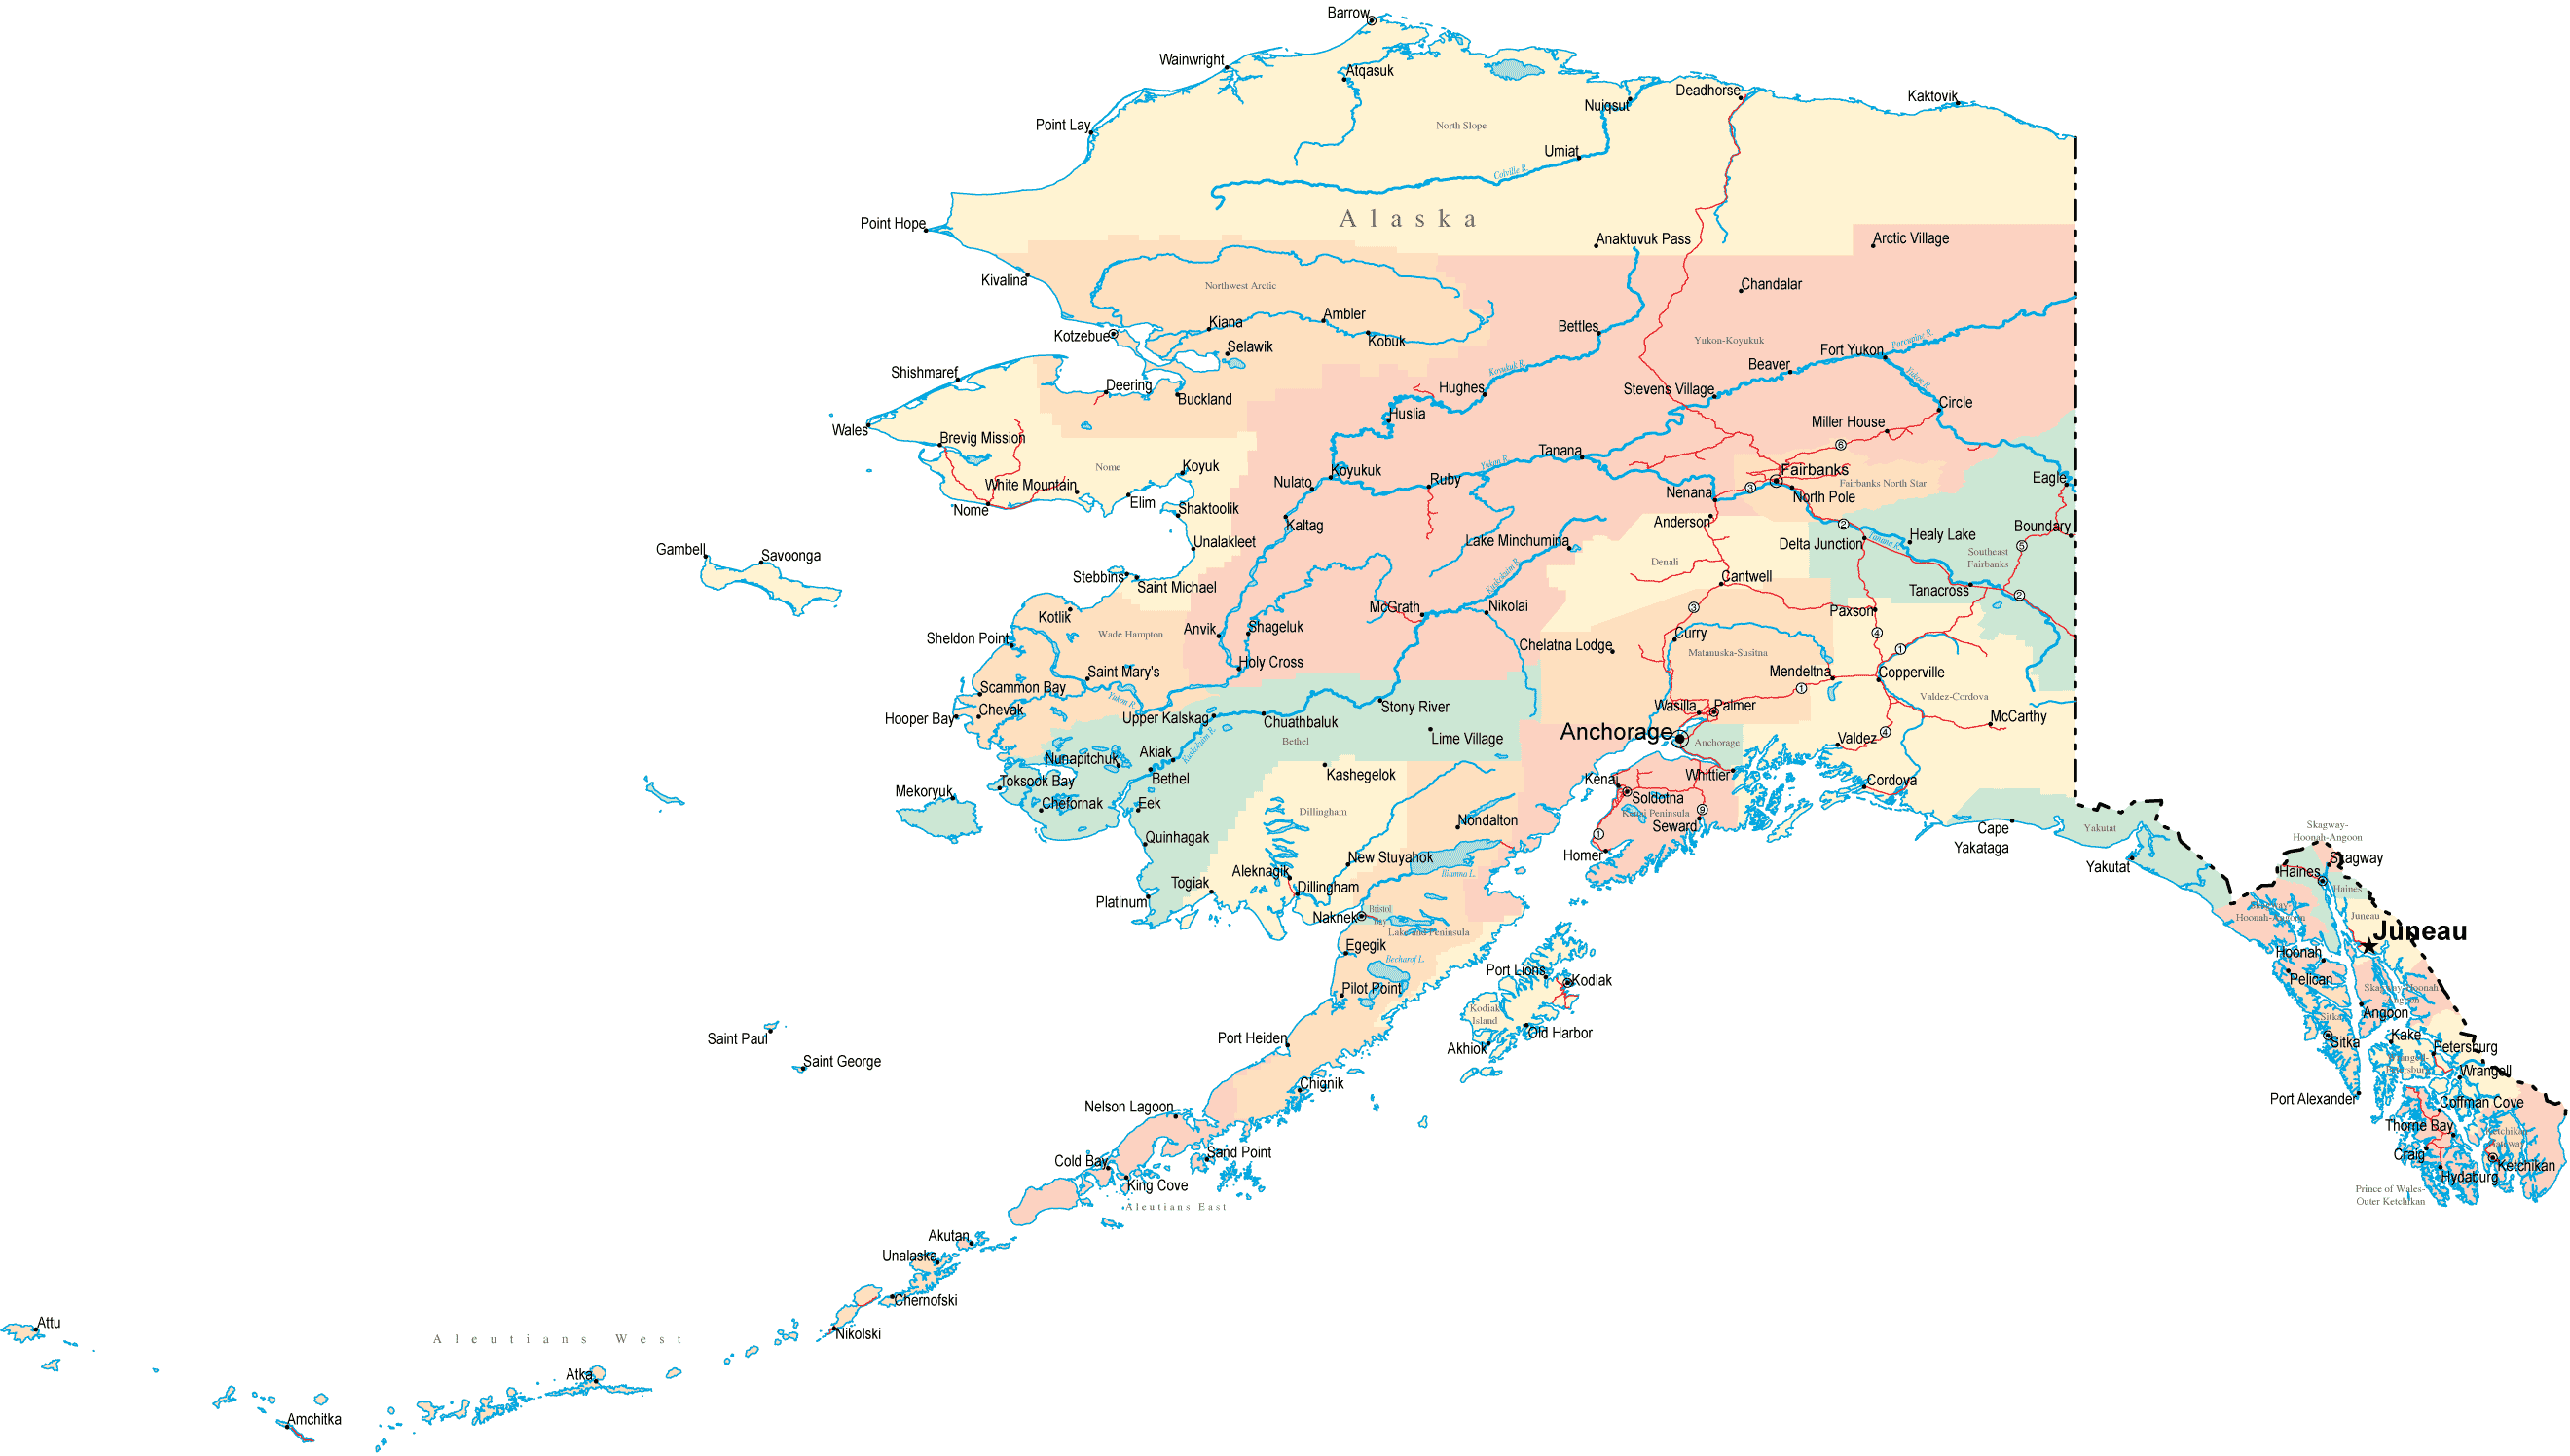 Alaska State Highway Map Alaska Road Map   AK Road Map   Alaska Highway Map